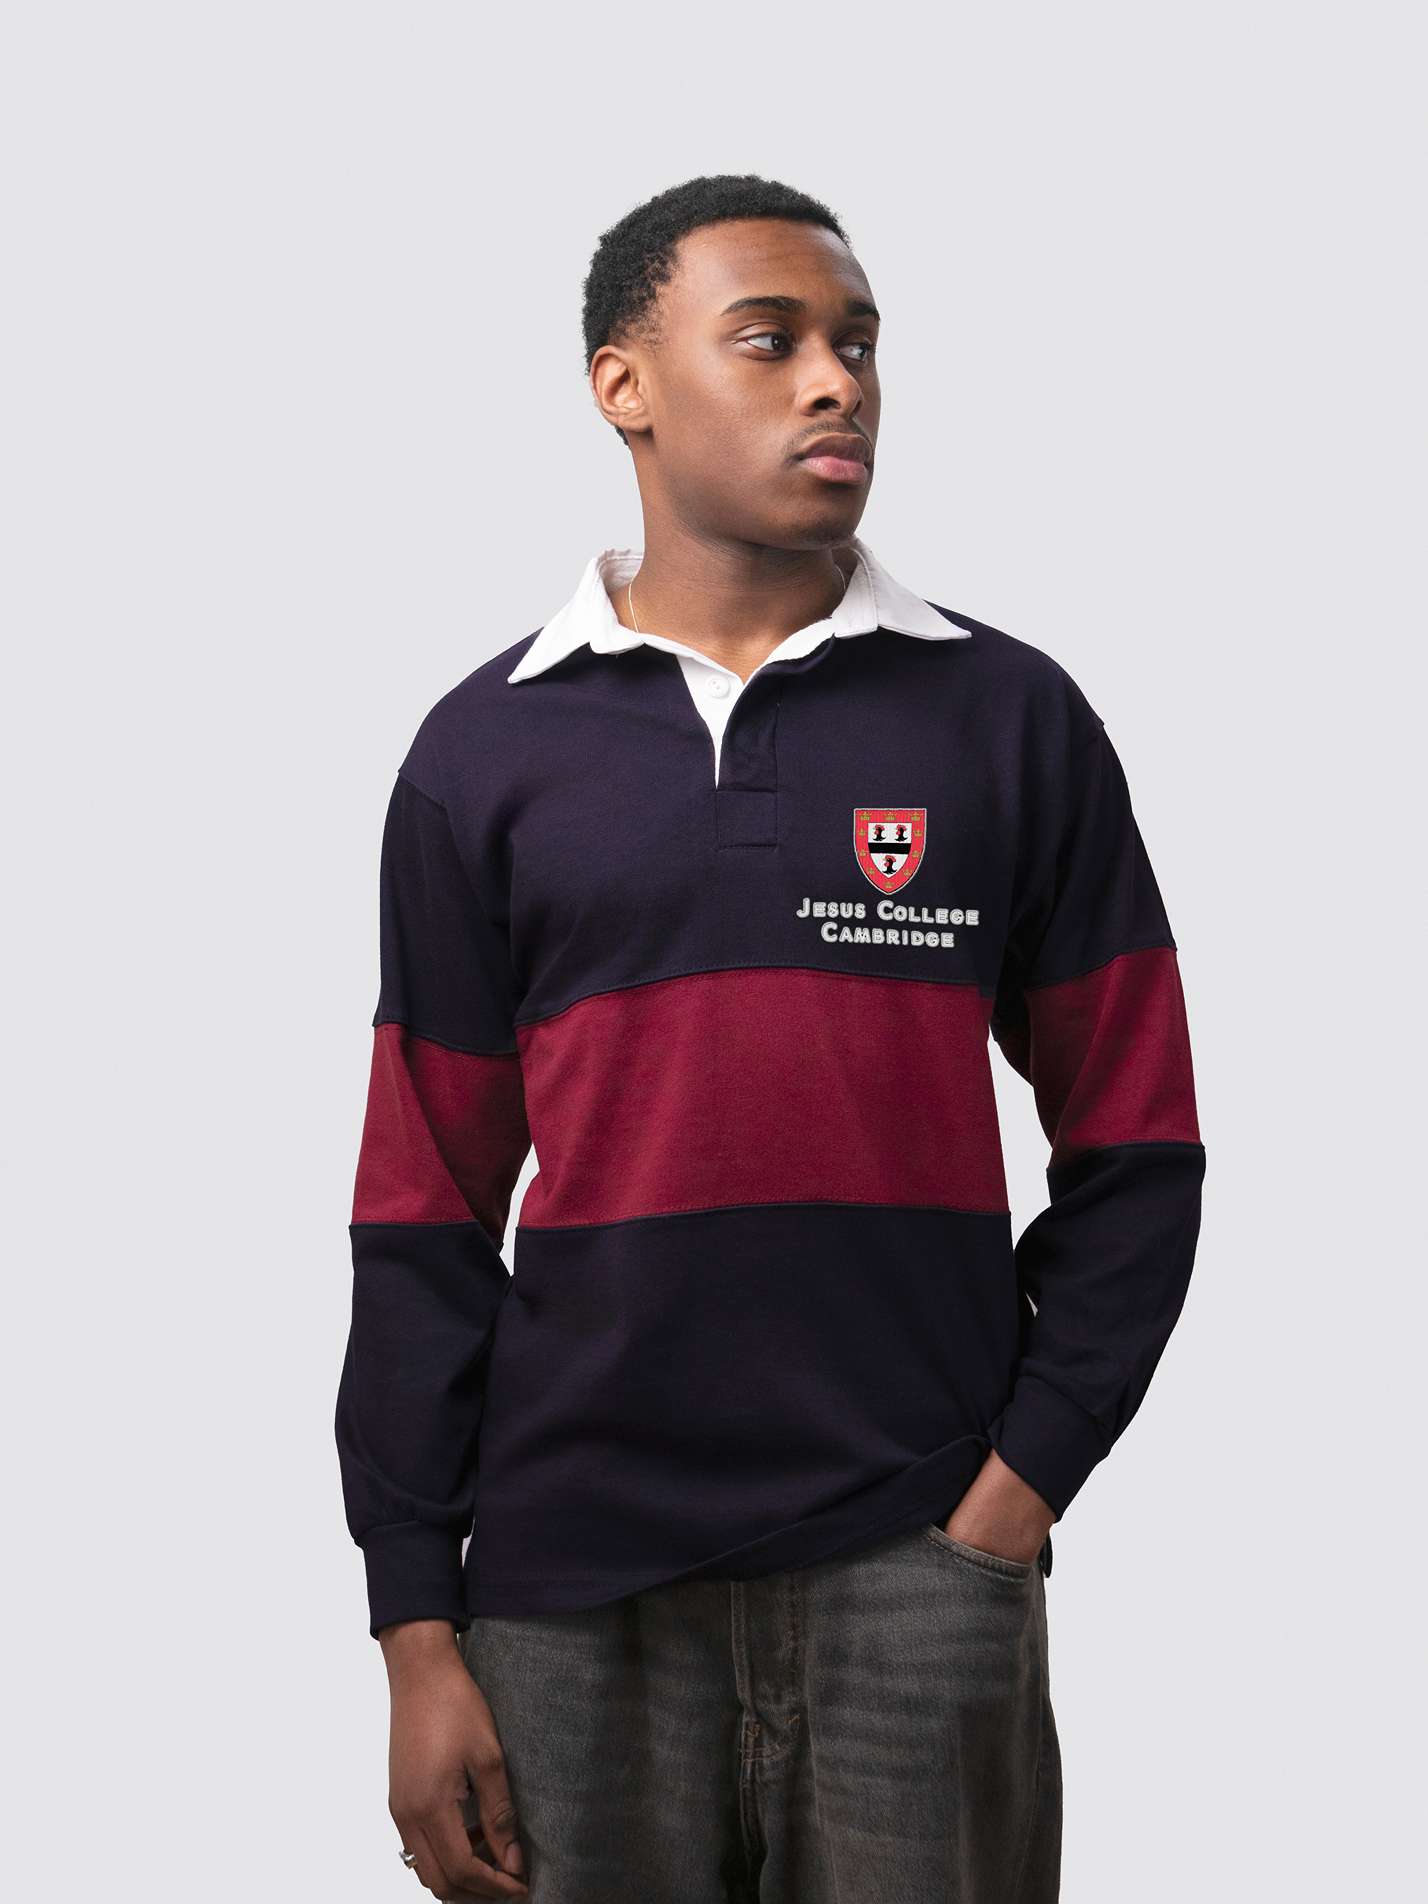 Jesus College Cambridge JCR Unisex Panelled Rugby Shirt